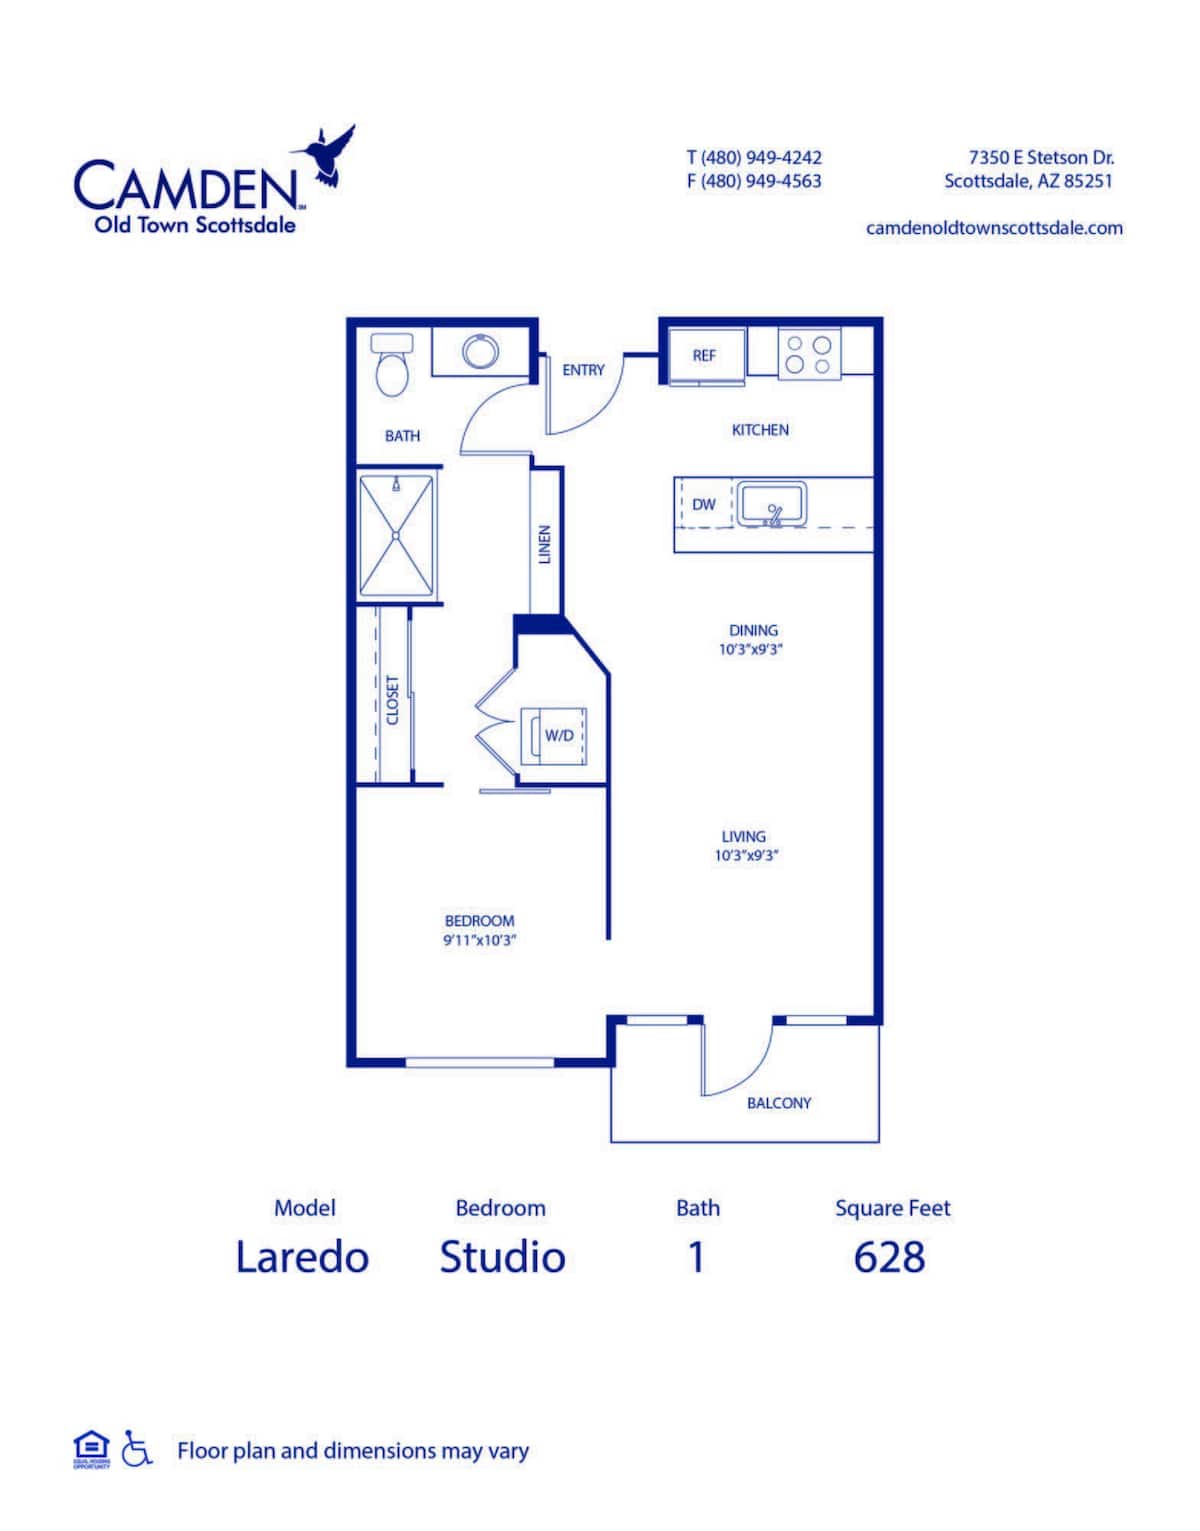 Floorplan diagram for Laredo, showing Studio